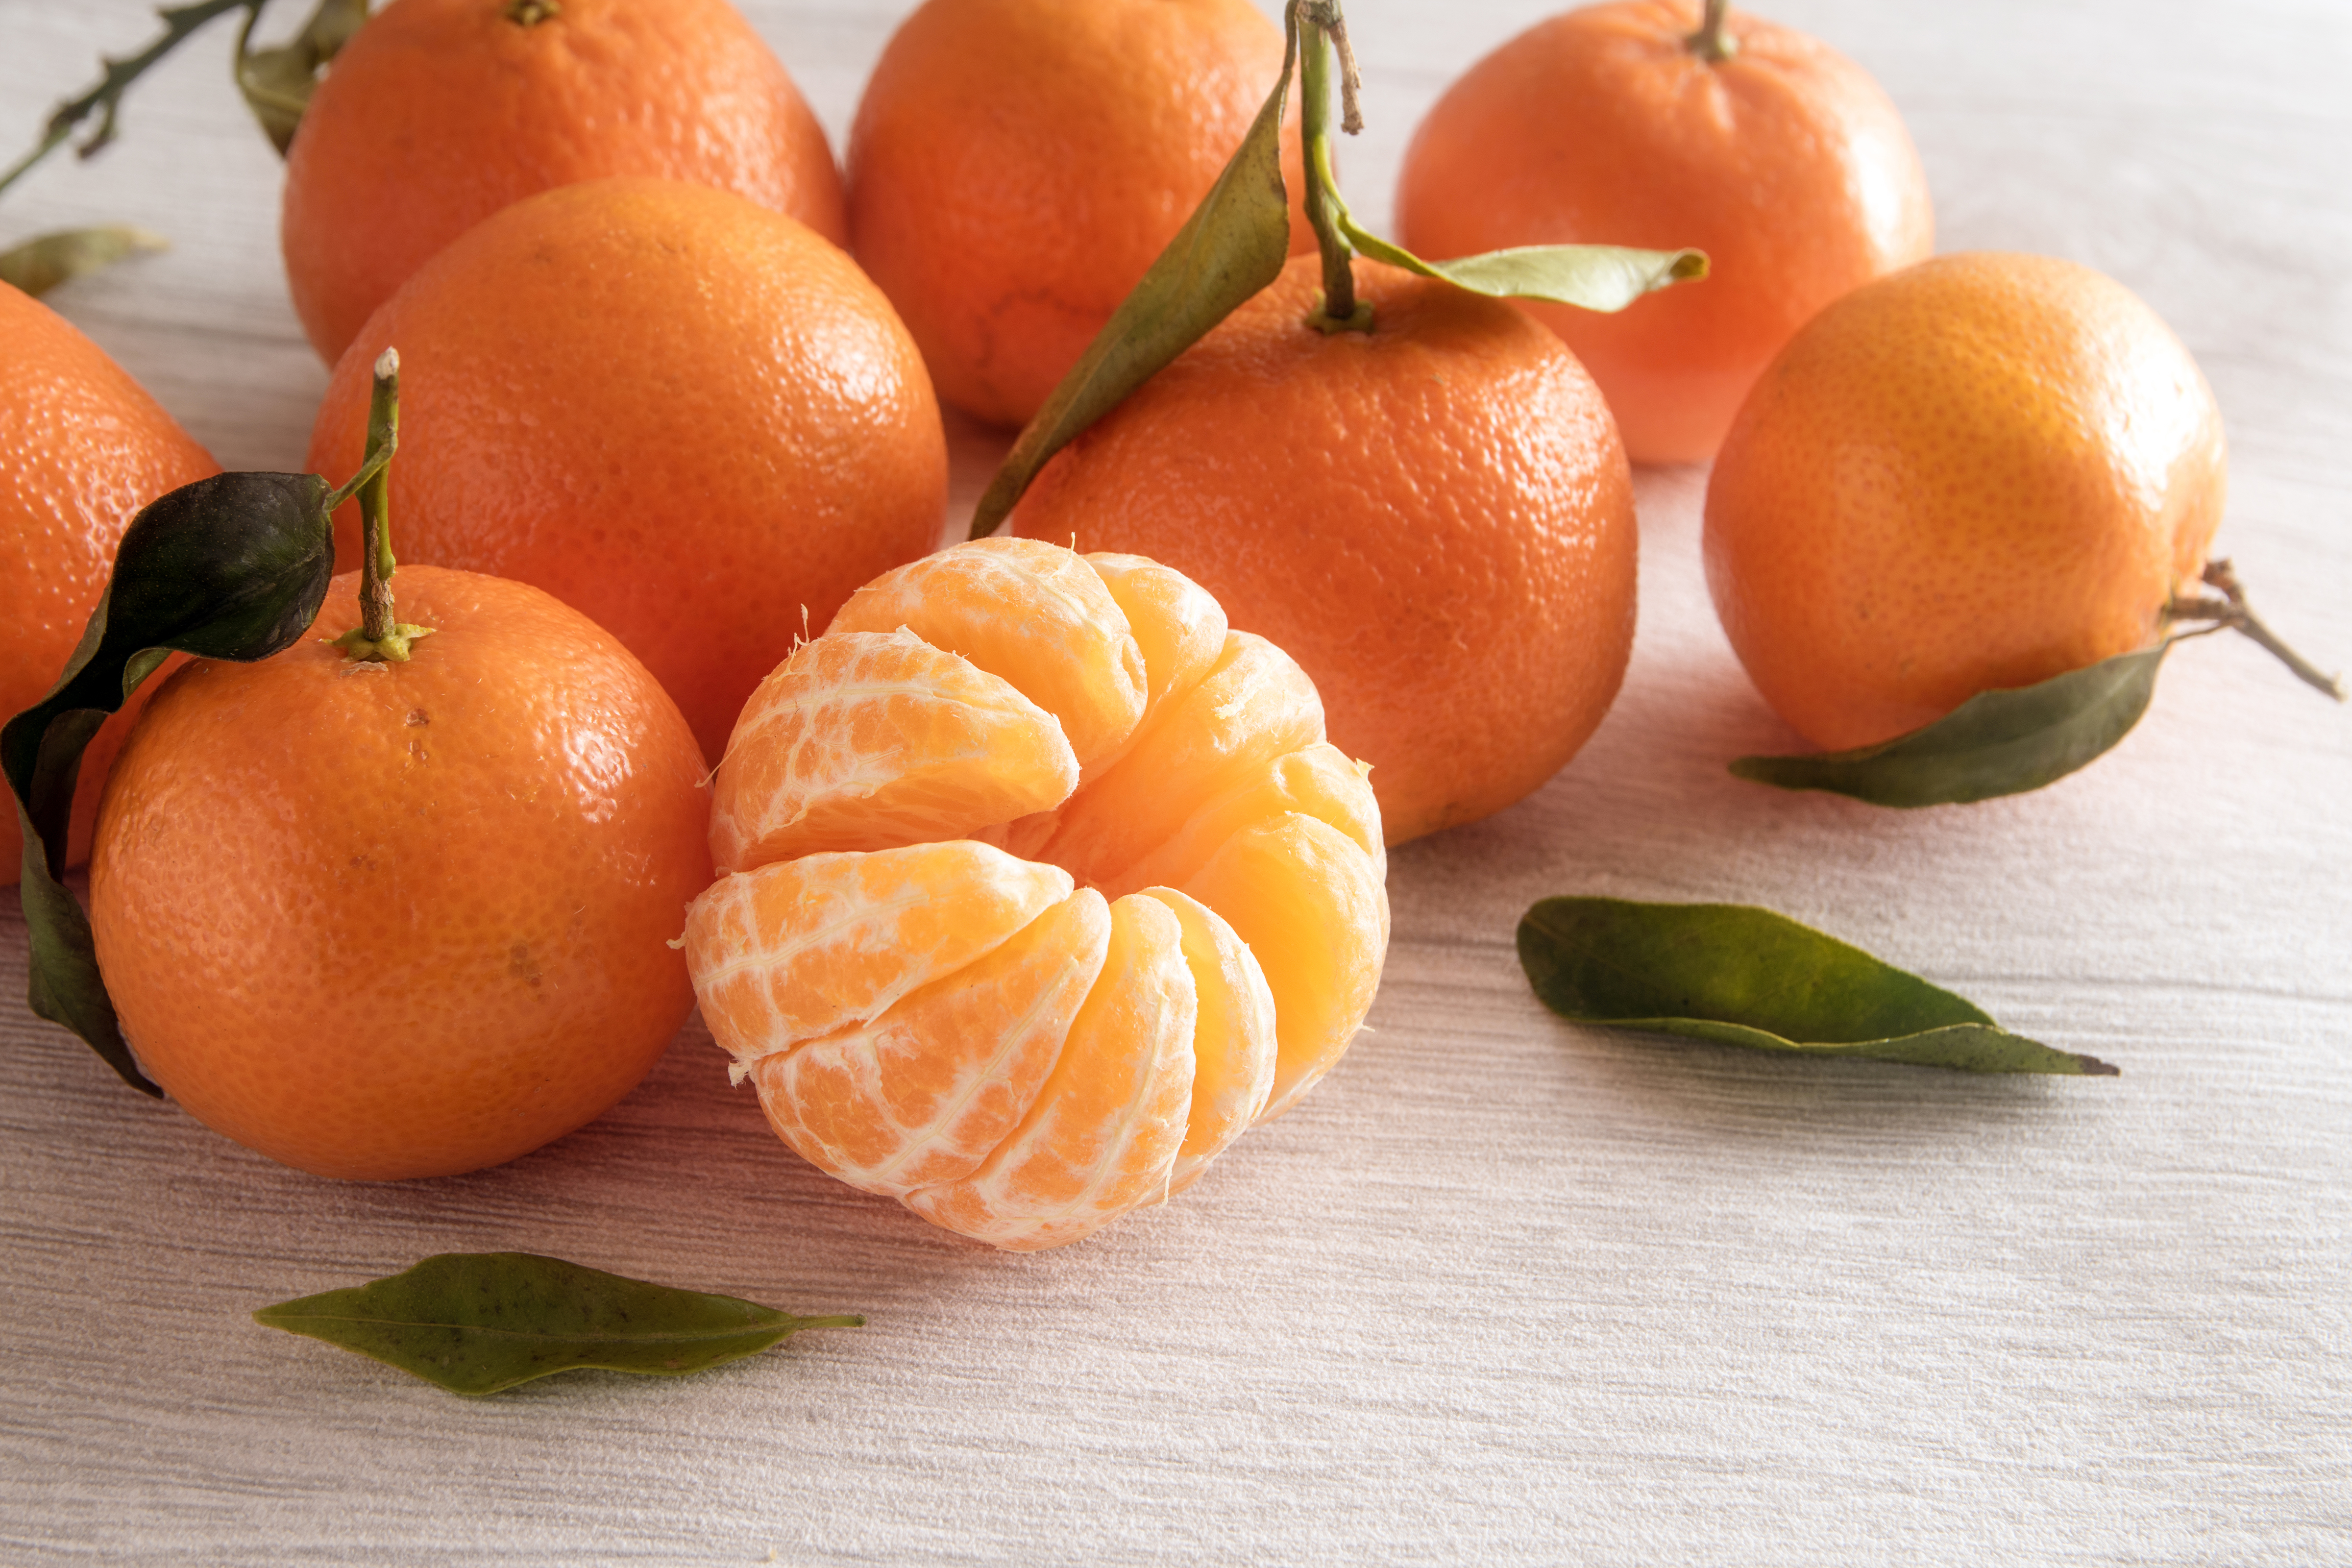 Tangerines and Winter Oranges